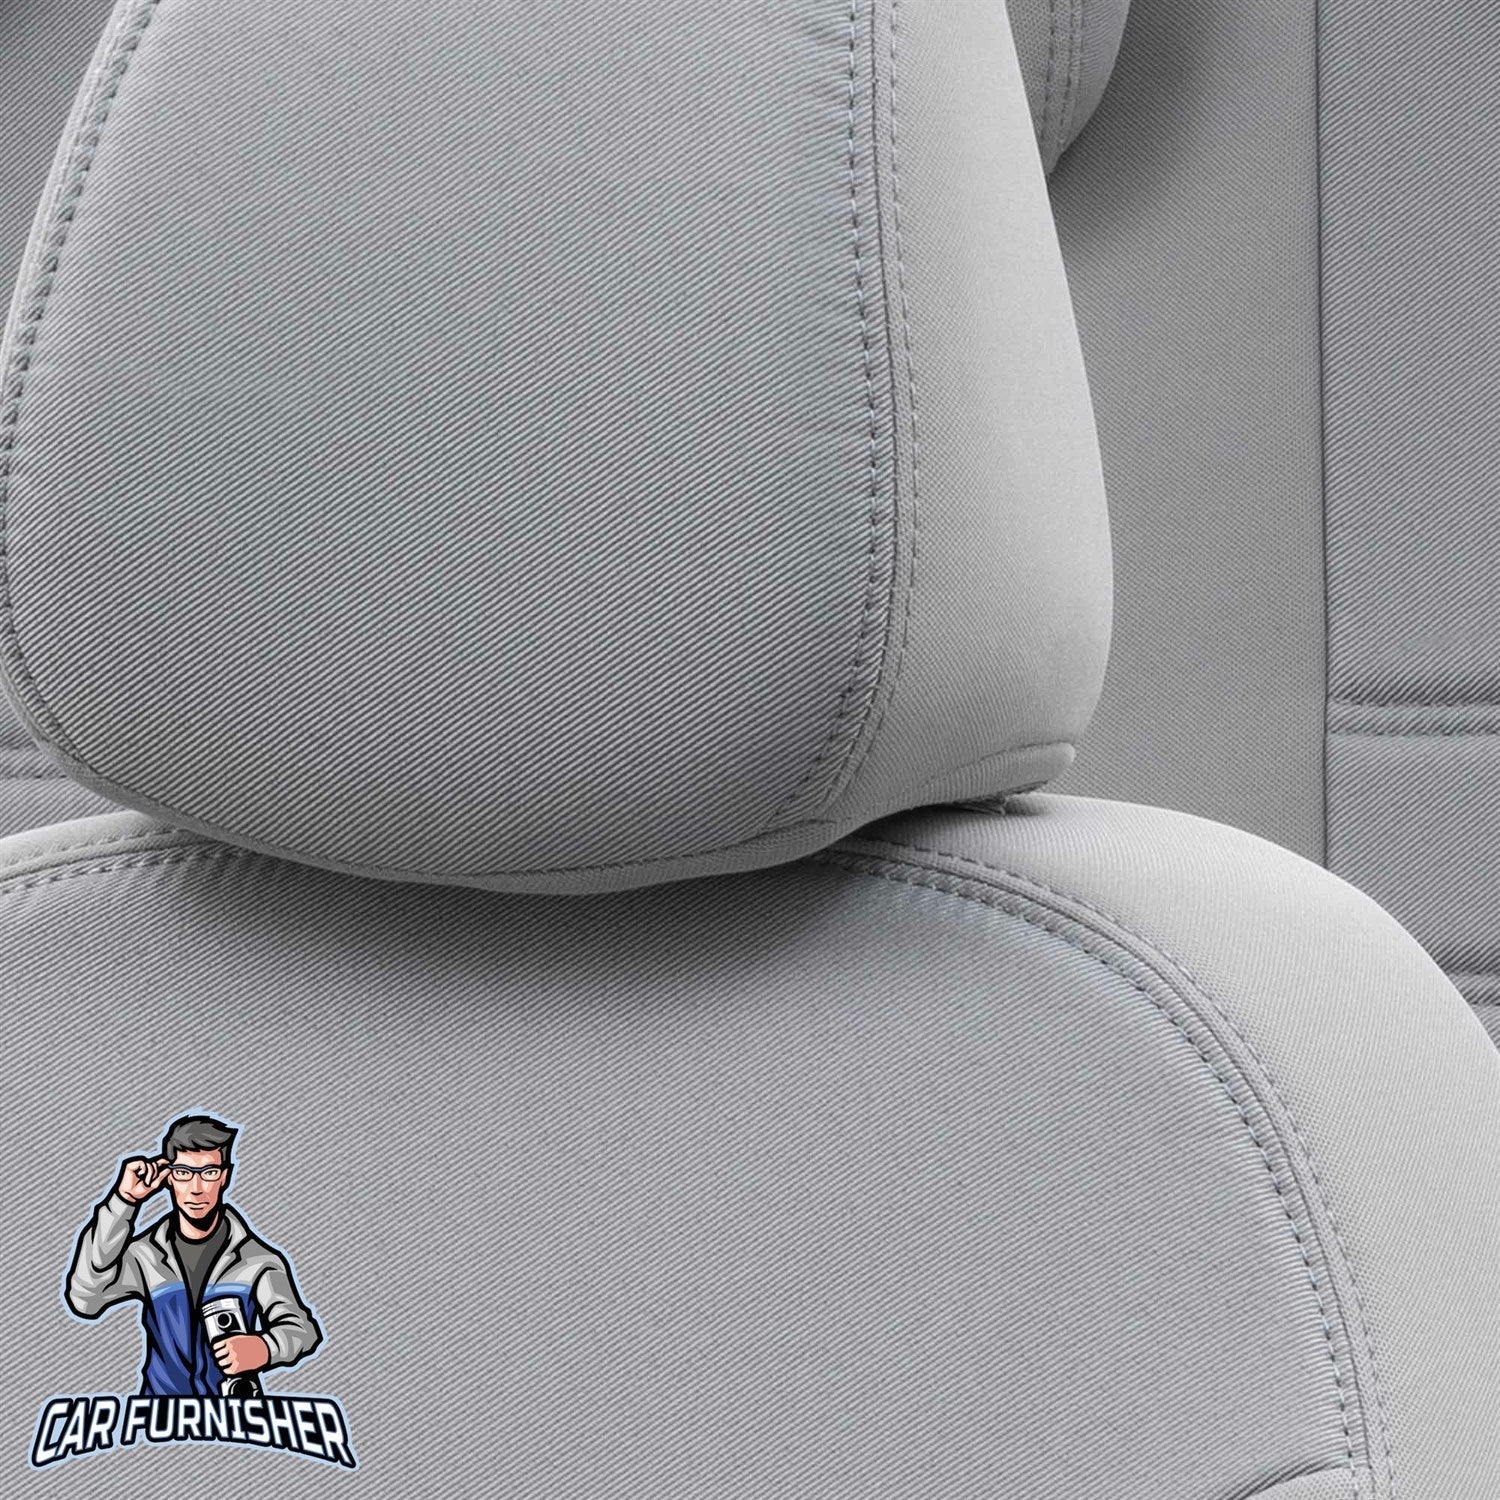 Mitsubishi Spacestar Seat Cover Original Jacquard Design Light Gray Jacquard Fabric